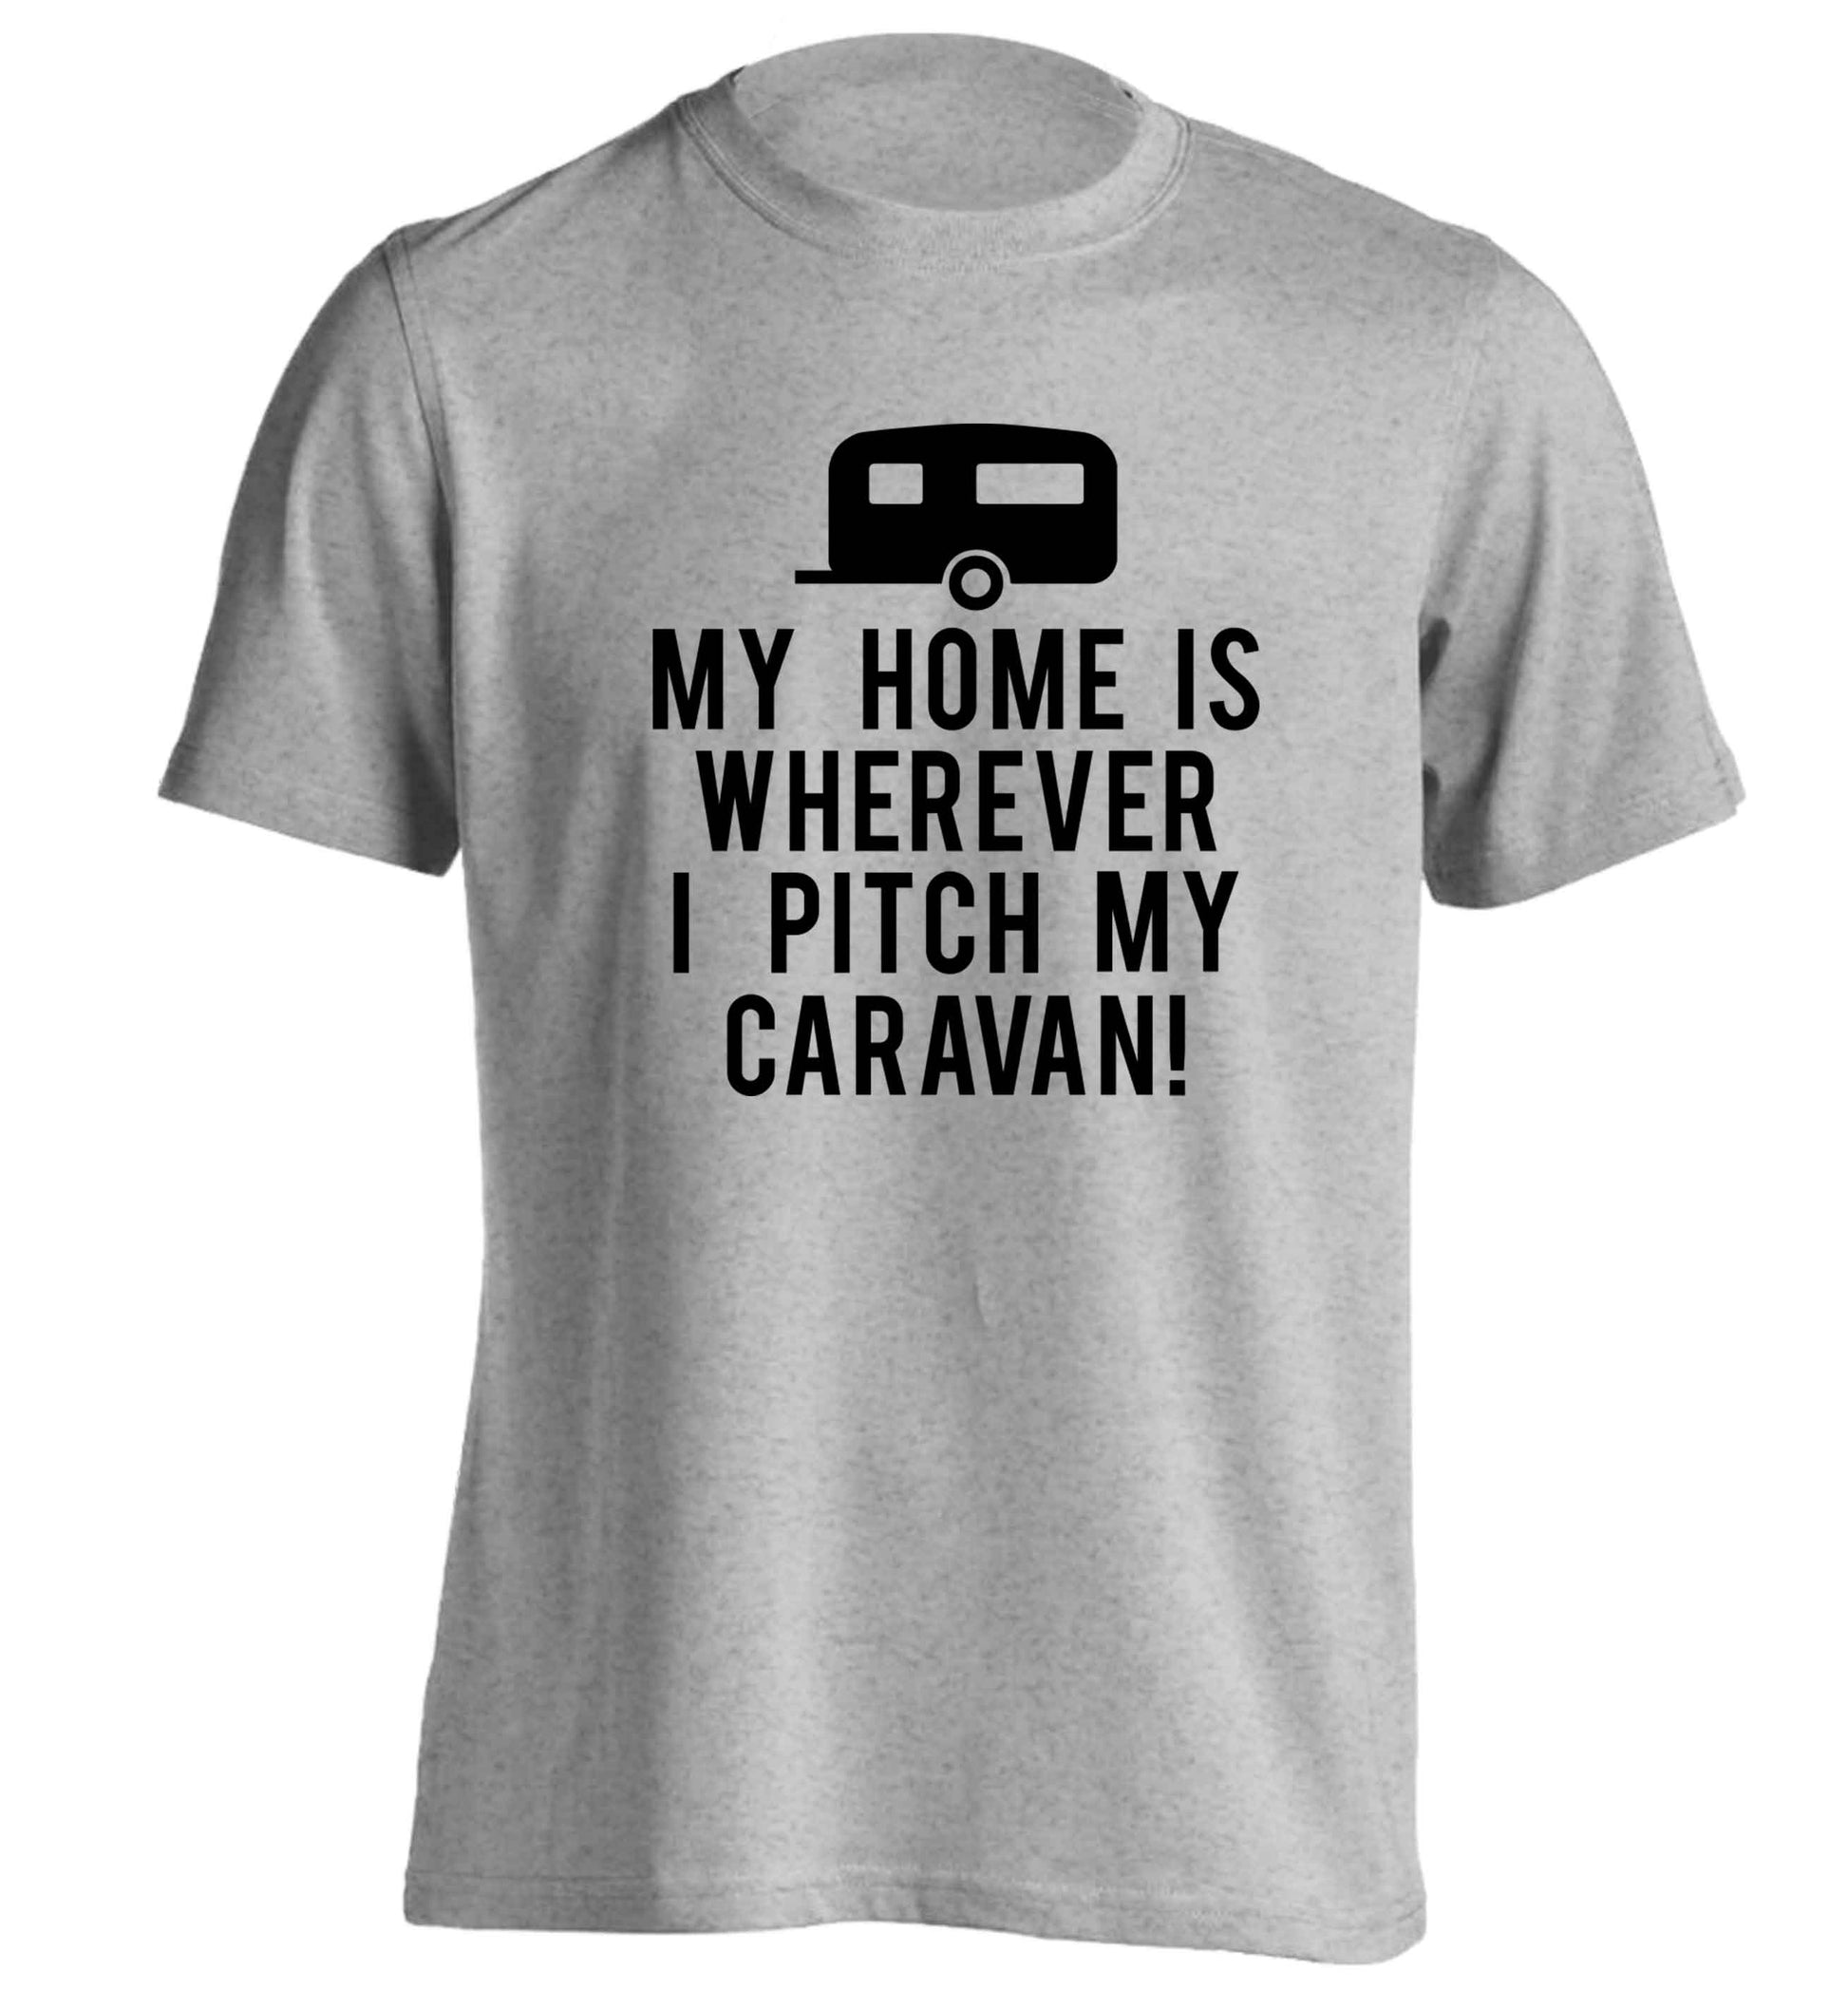 My home is wherever I pitch my caravan adults unisex grey Tshirt 2XL